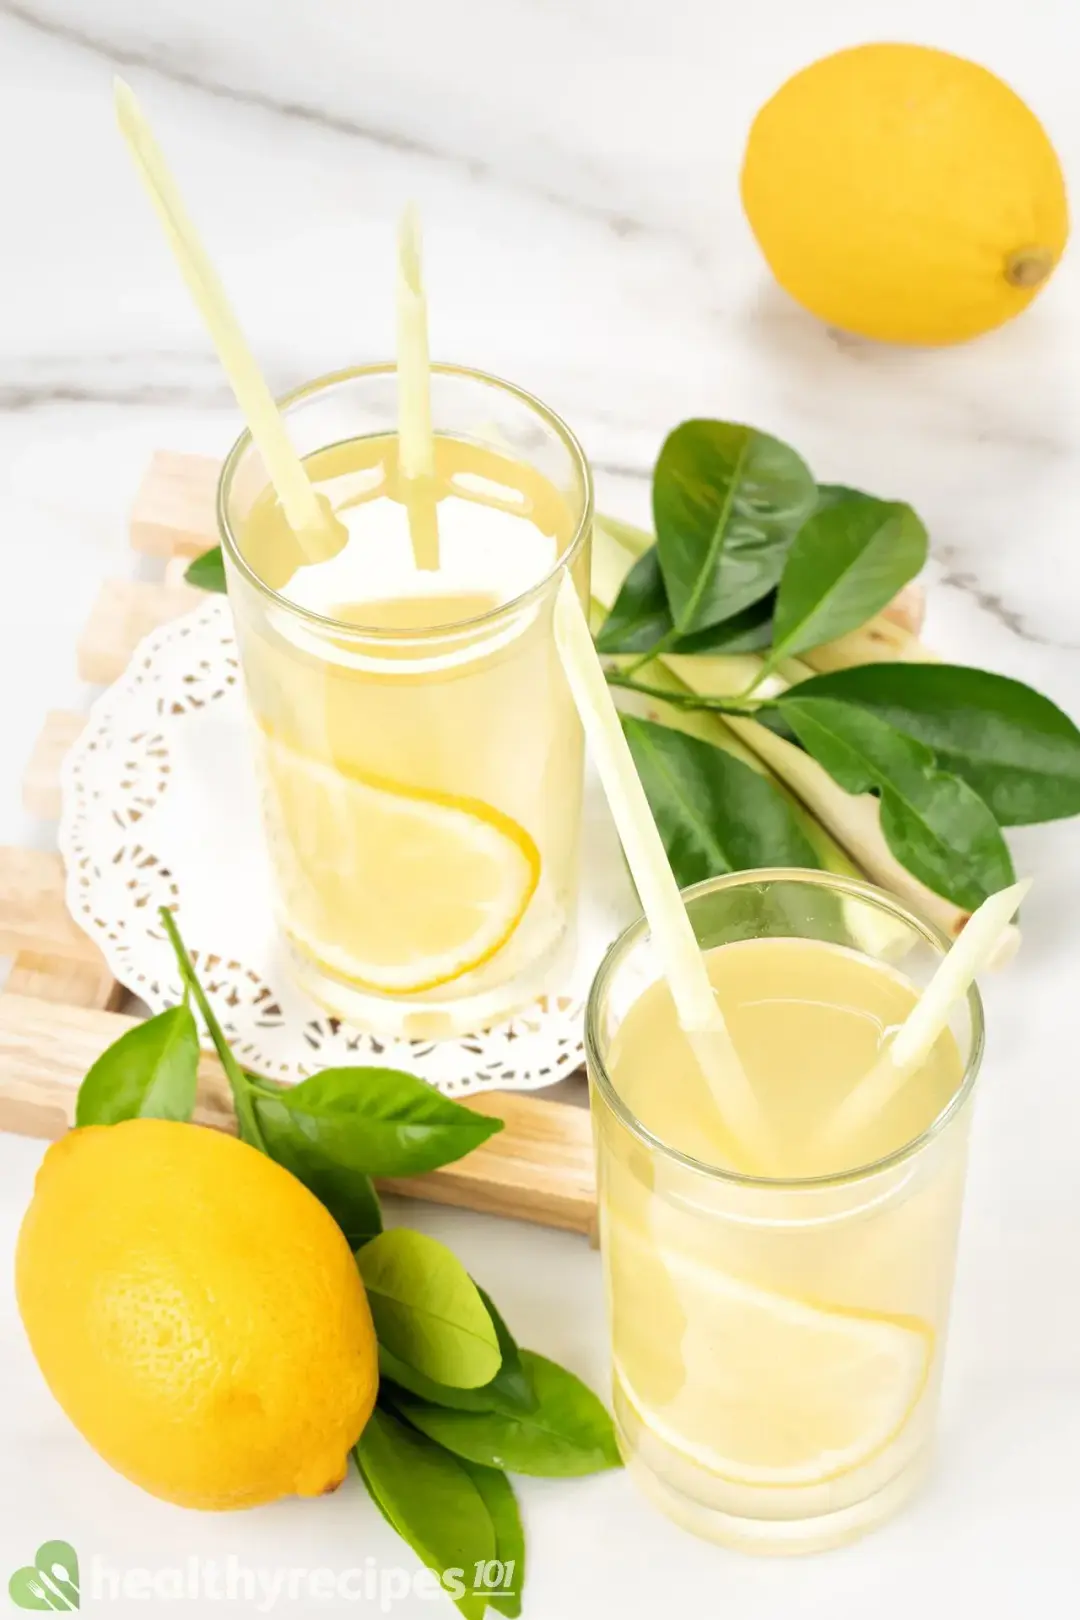 Two glasses of vinegar and lemon juice drinks, with white straws, whole lemons, and lemon leaves around